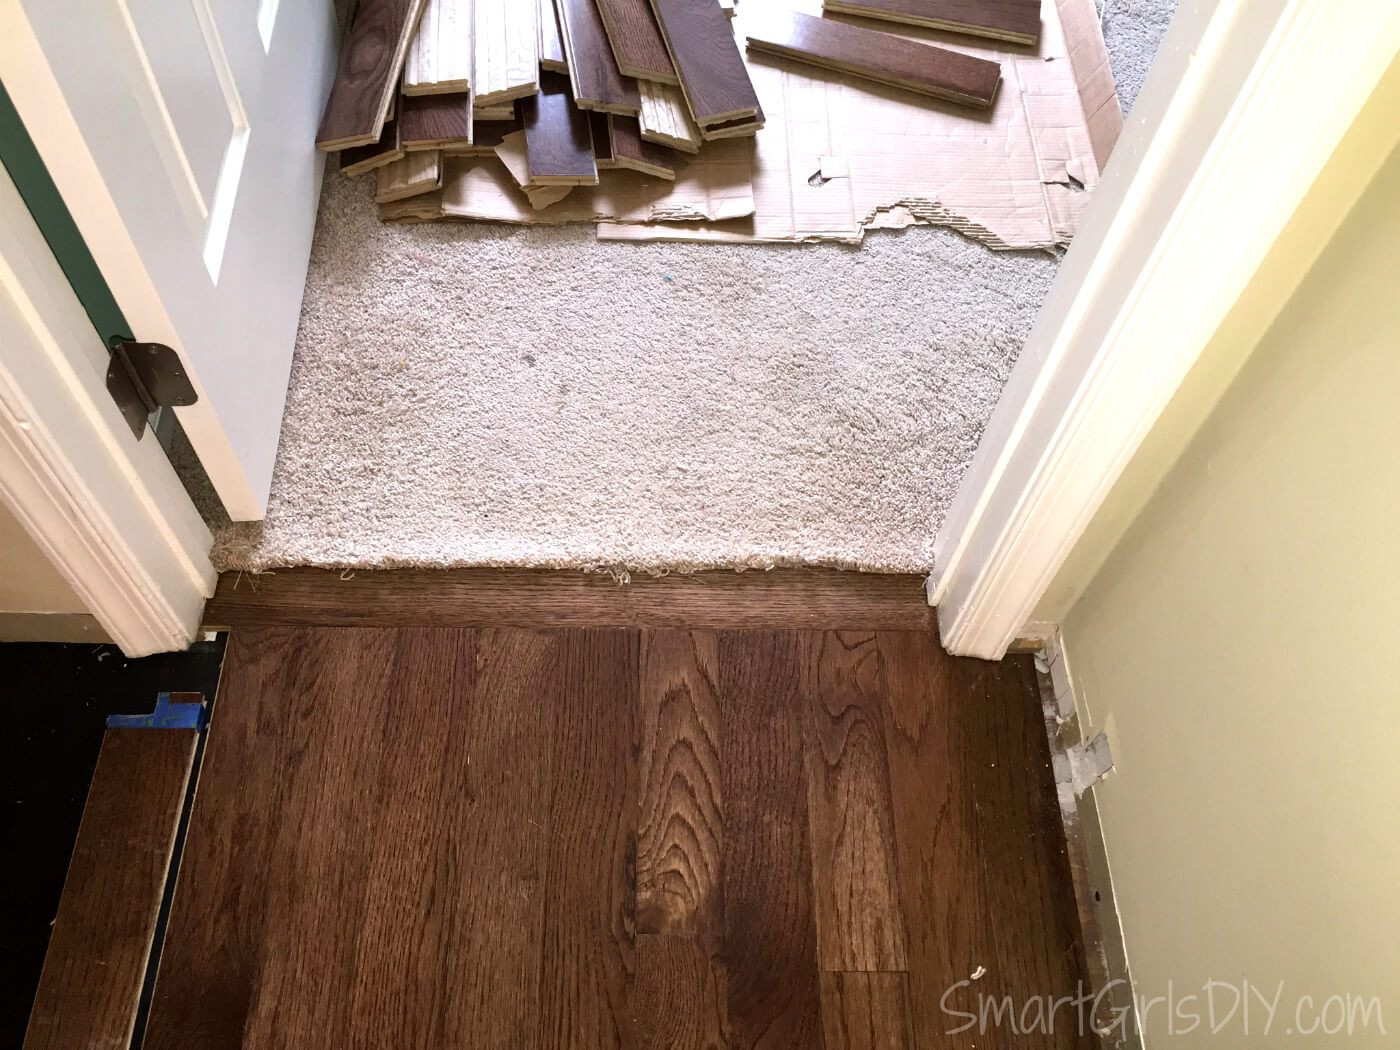 porta nails 2 hardwood flooring nails of upstairs hallway 1 installing hardwood floors inside transition between carpet and hardwood floor